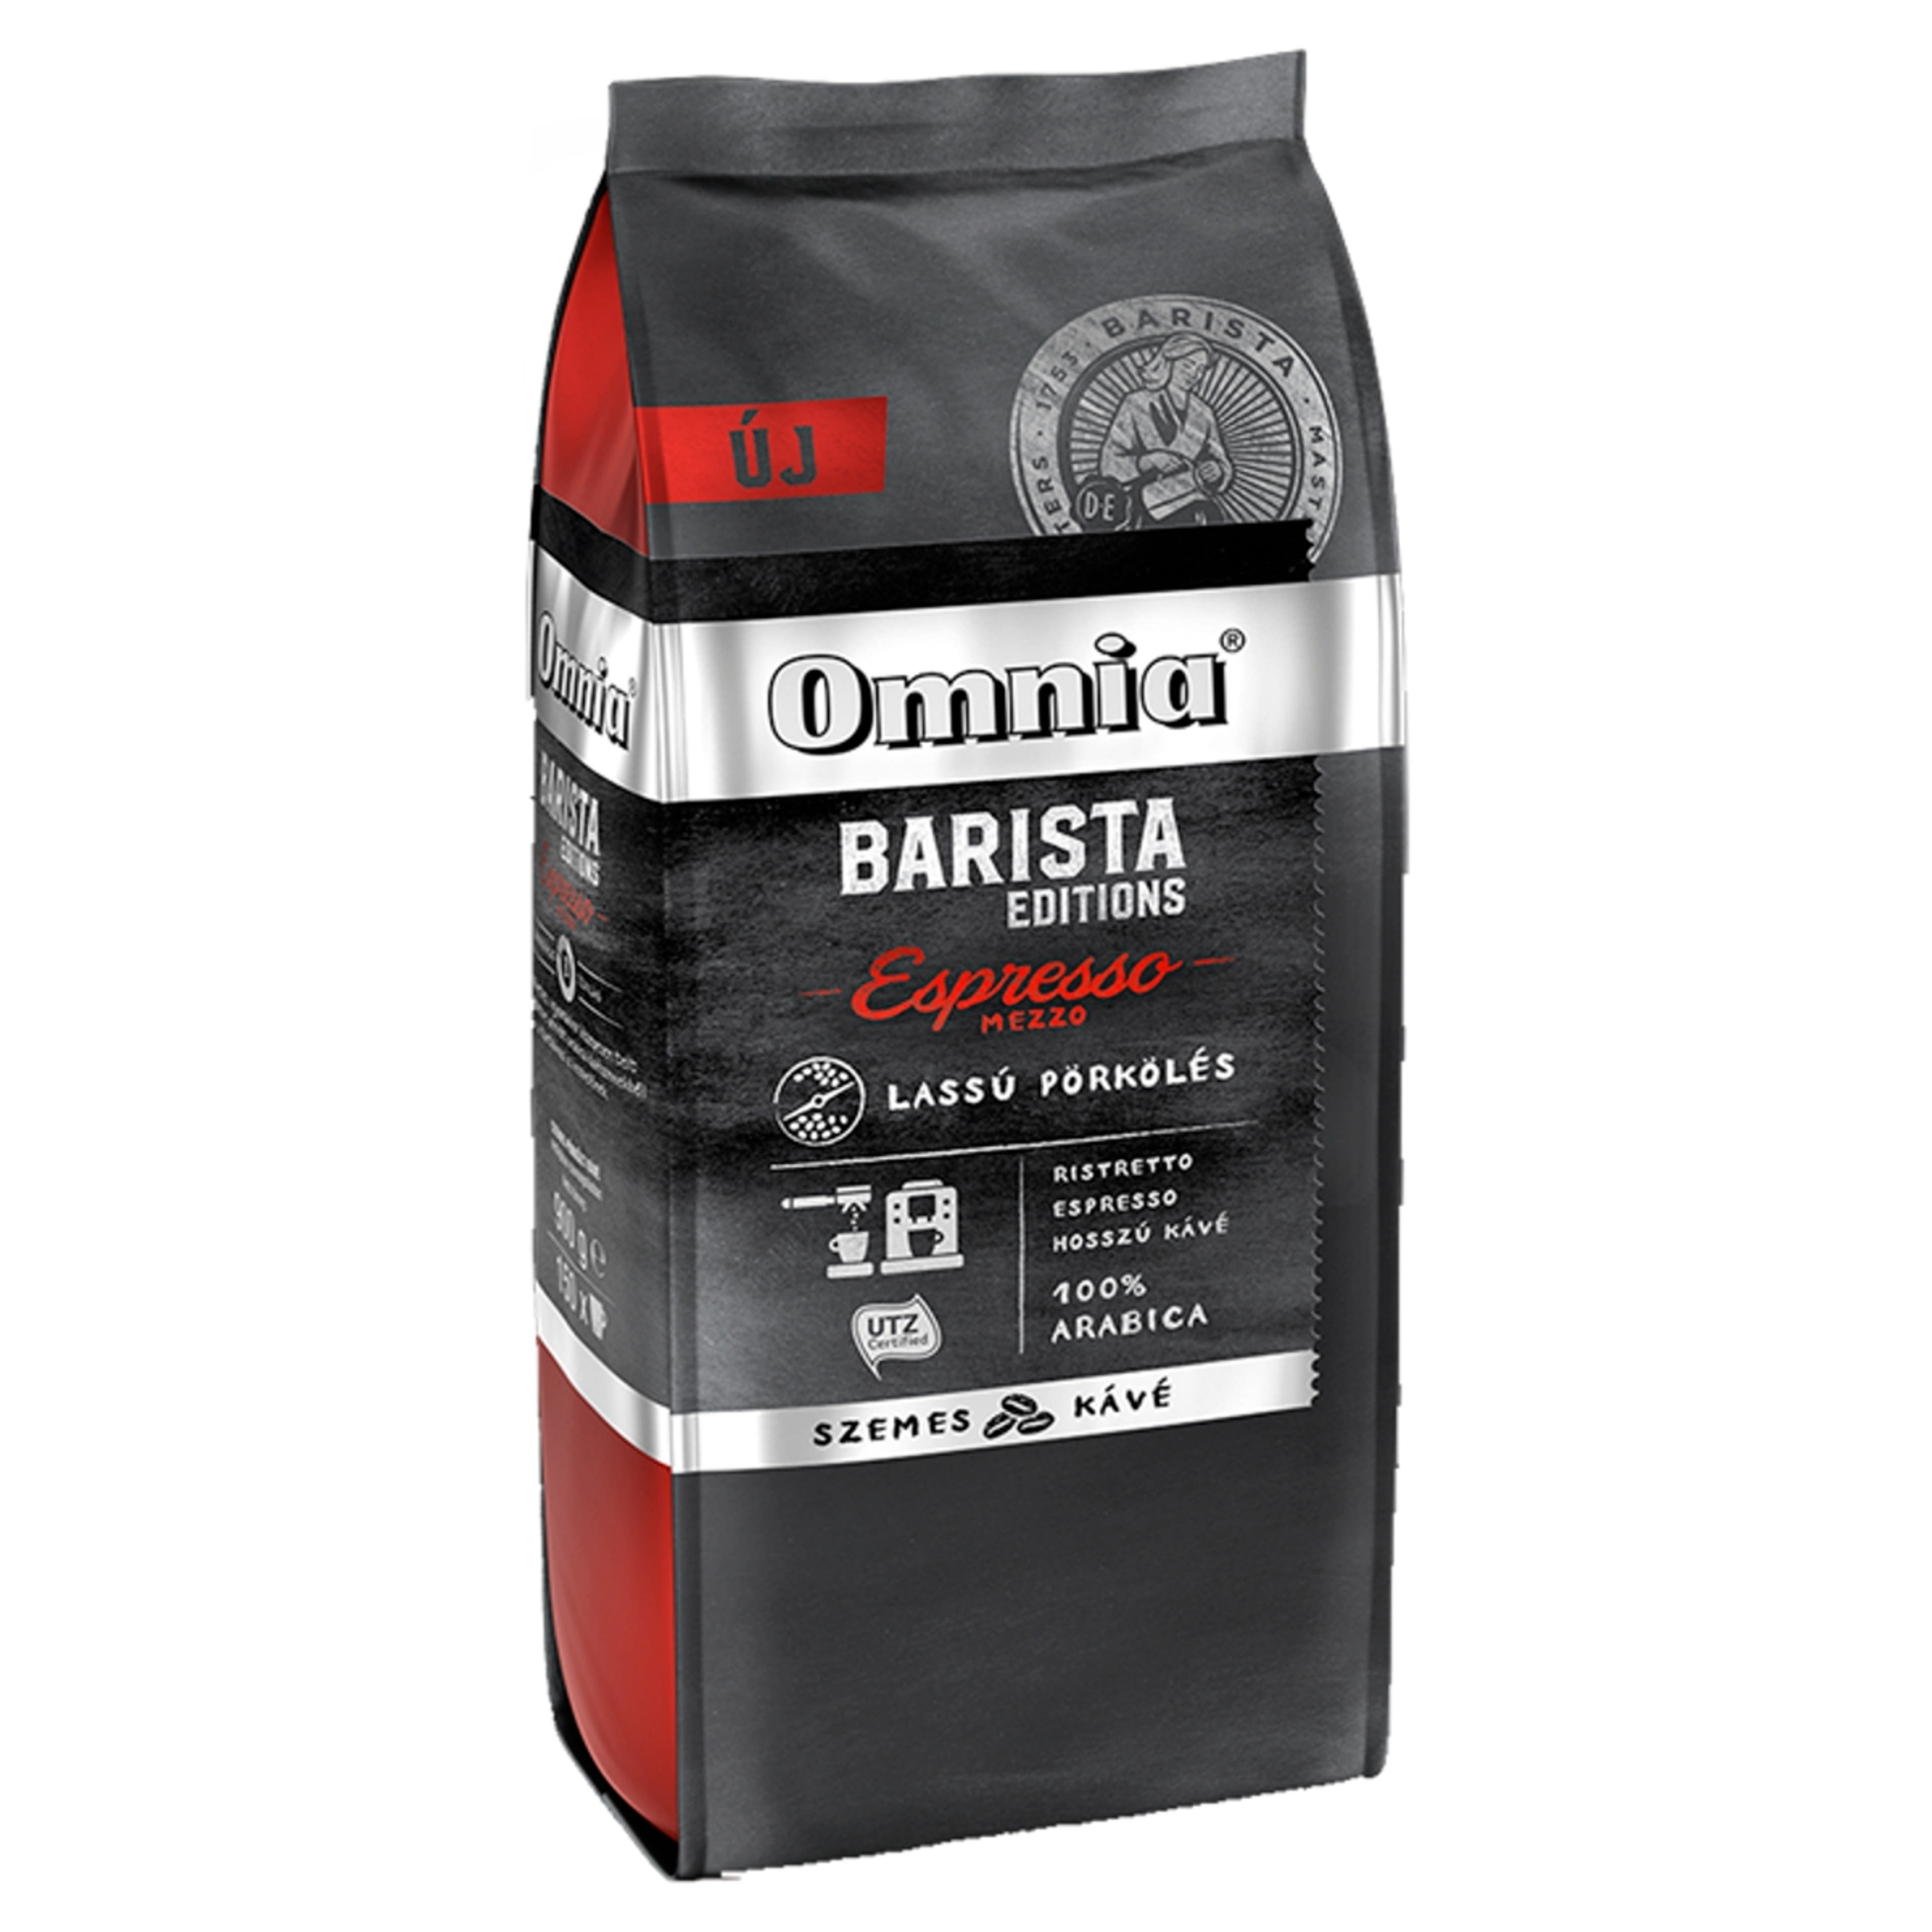 Douwe Egberts Omnia Barista Edition Espresso Mezzo szemes kávé - 900 g-2